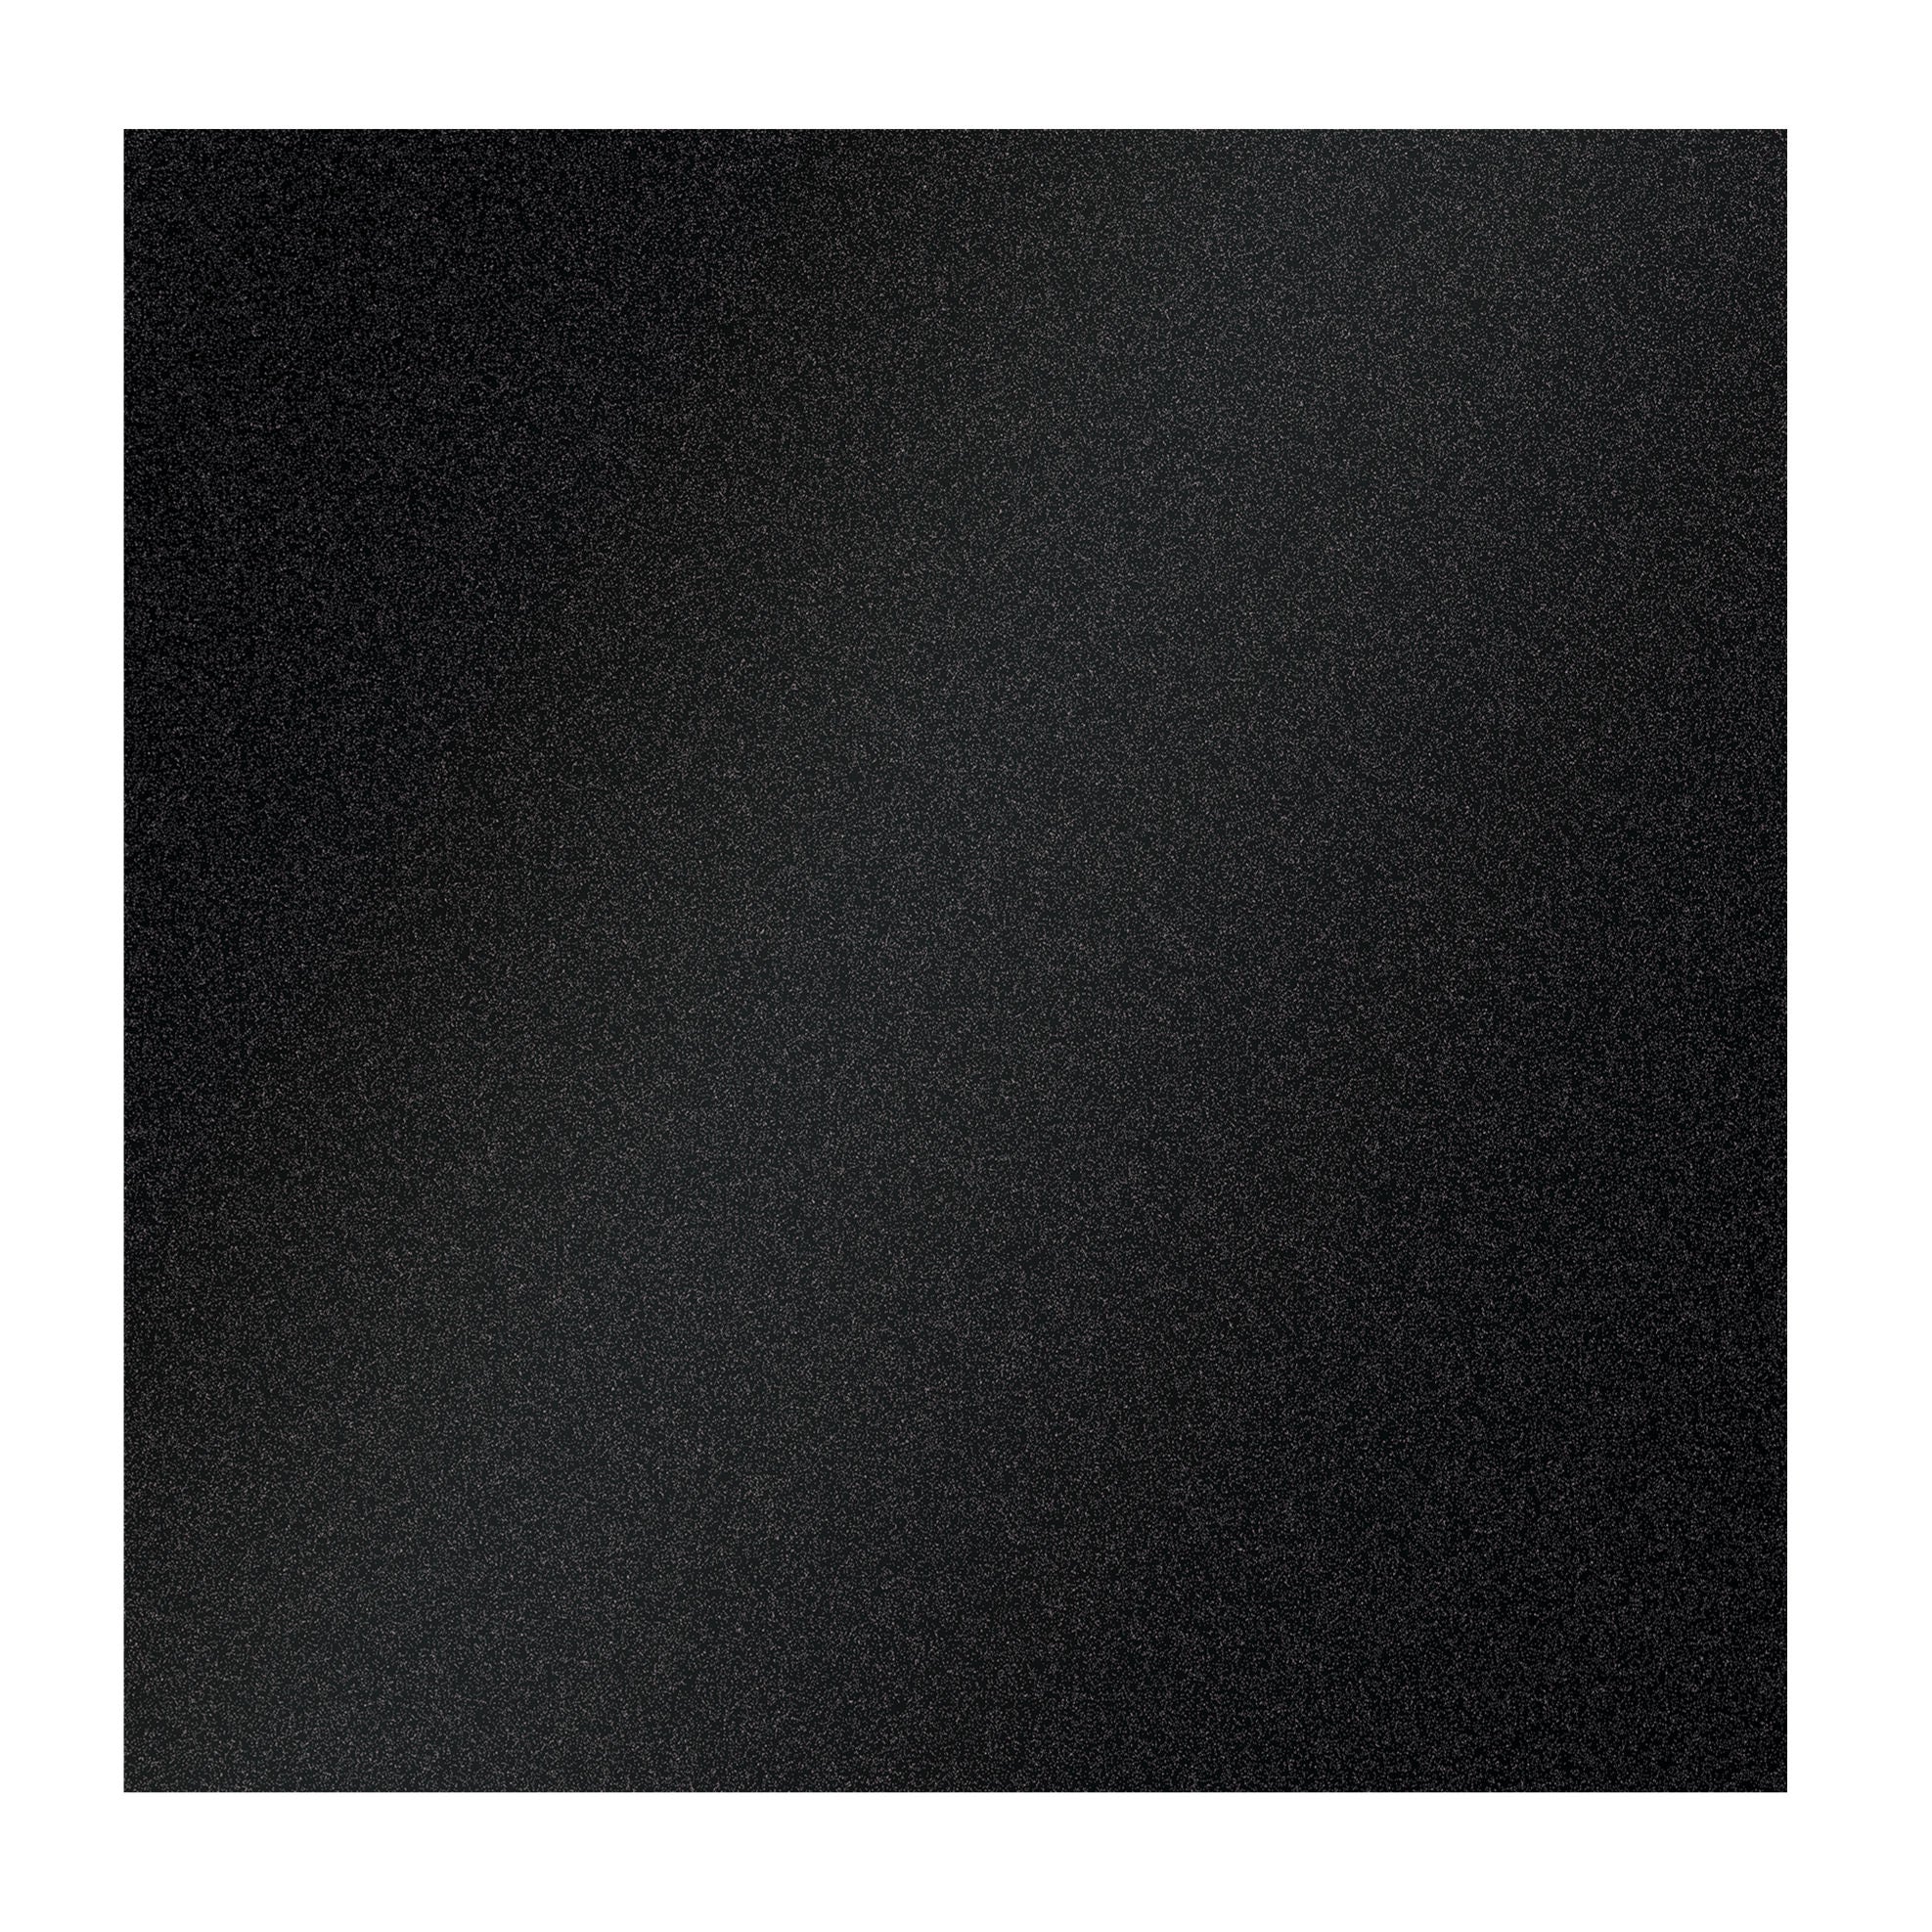 Gresie exterior / interior portelanata Sugar Lappato, White & Black, rectificata, neagra, imitatie glazura zahar, 60 x 60 cm